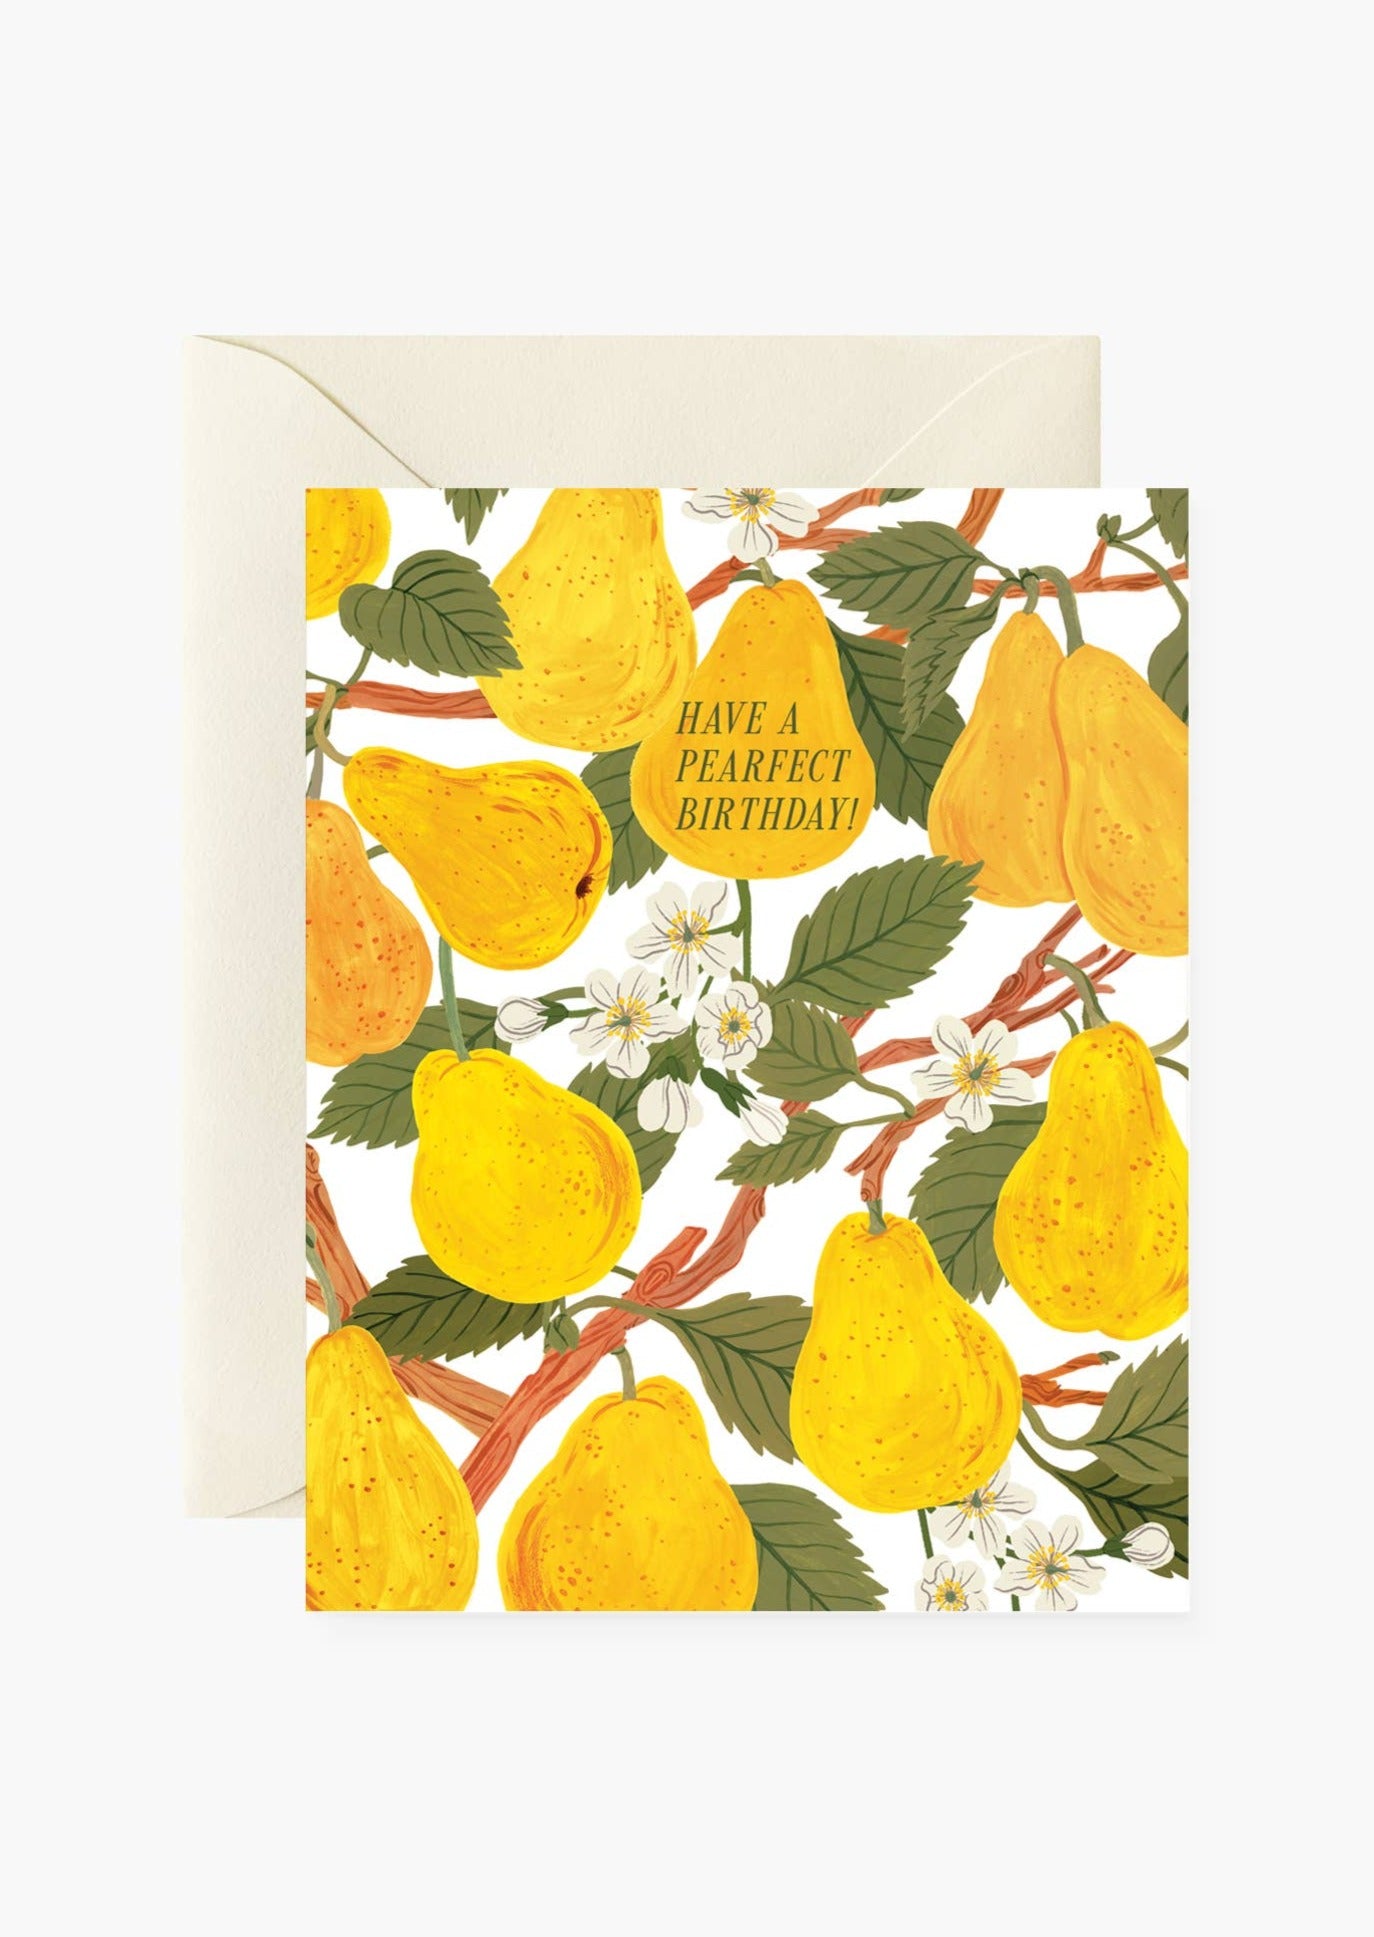 A Pear-fect Birthday Card